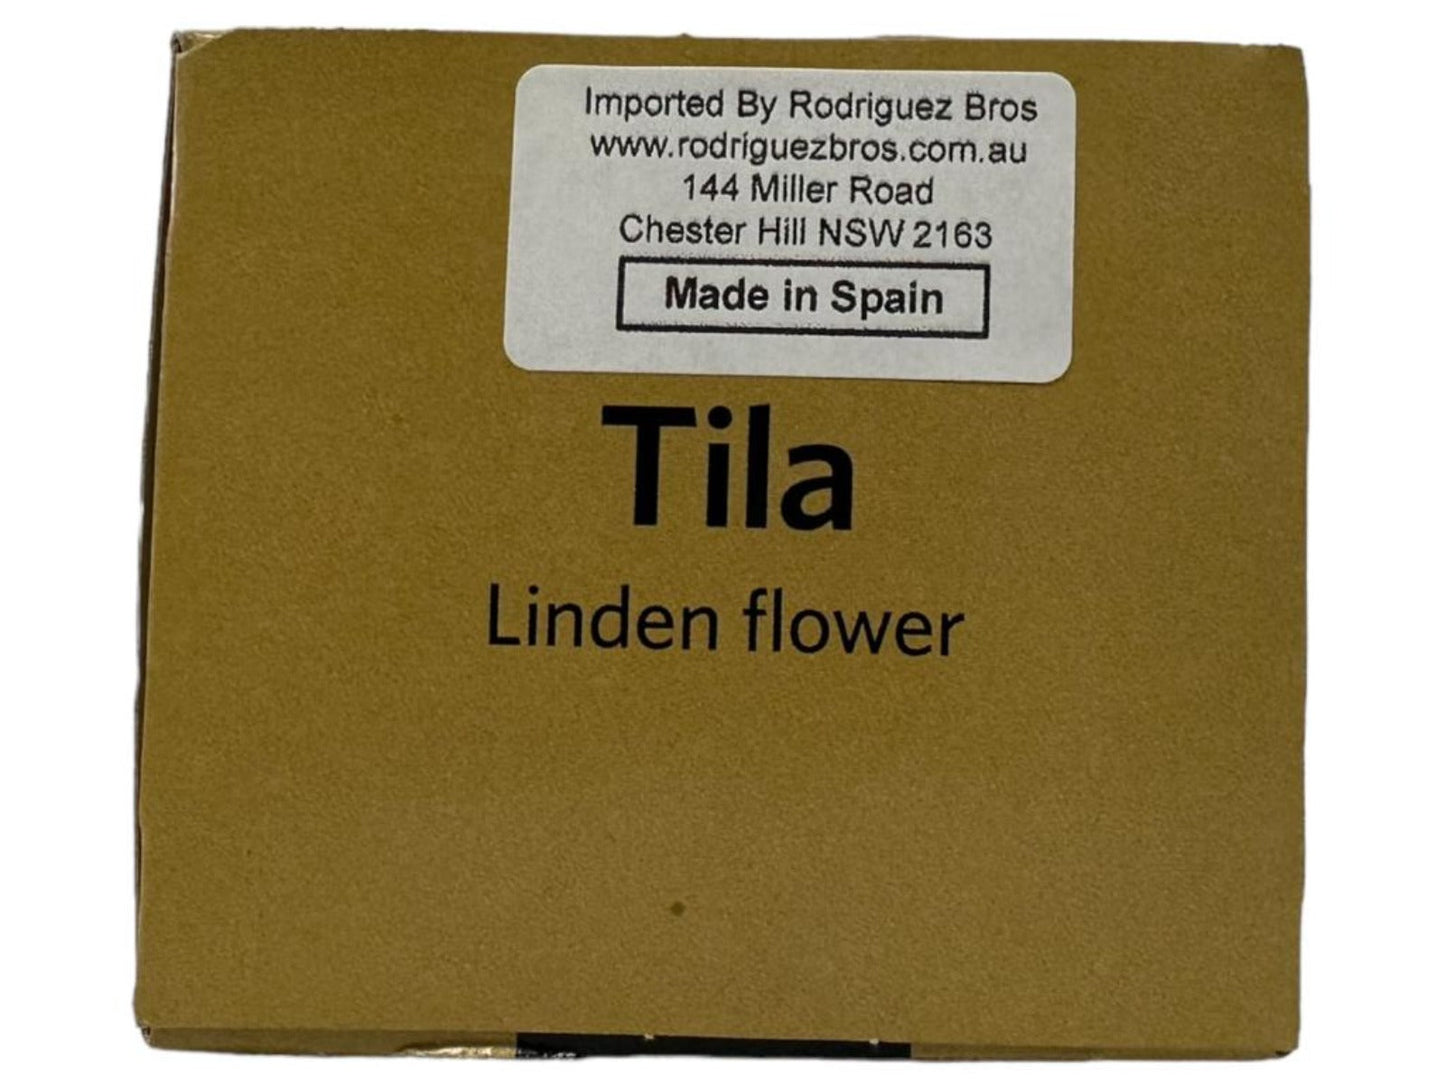 Carmencita Spanish Linden Flower Tea 20x bags 24g - 3 Pack Best Before June 2025